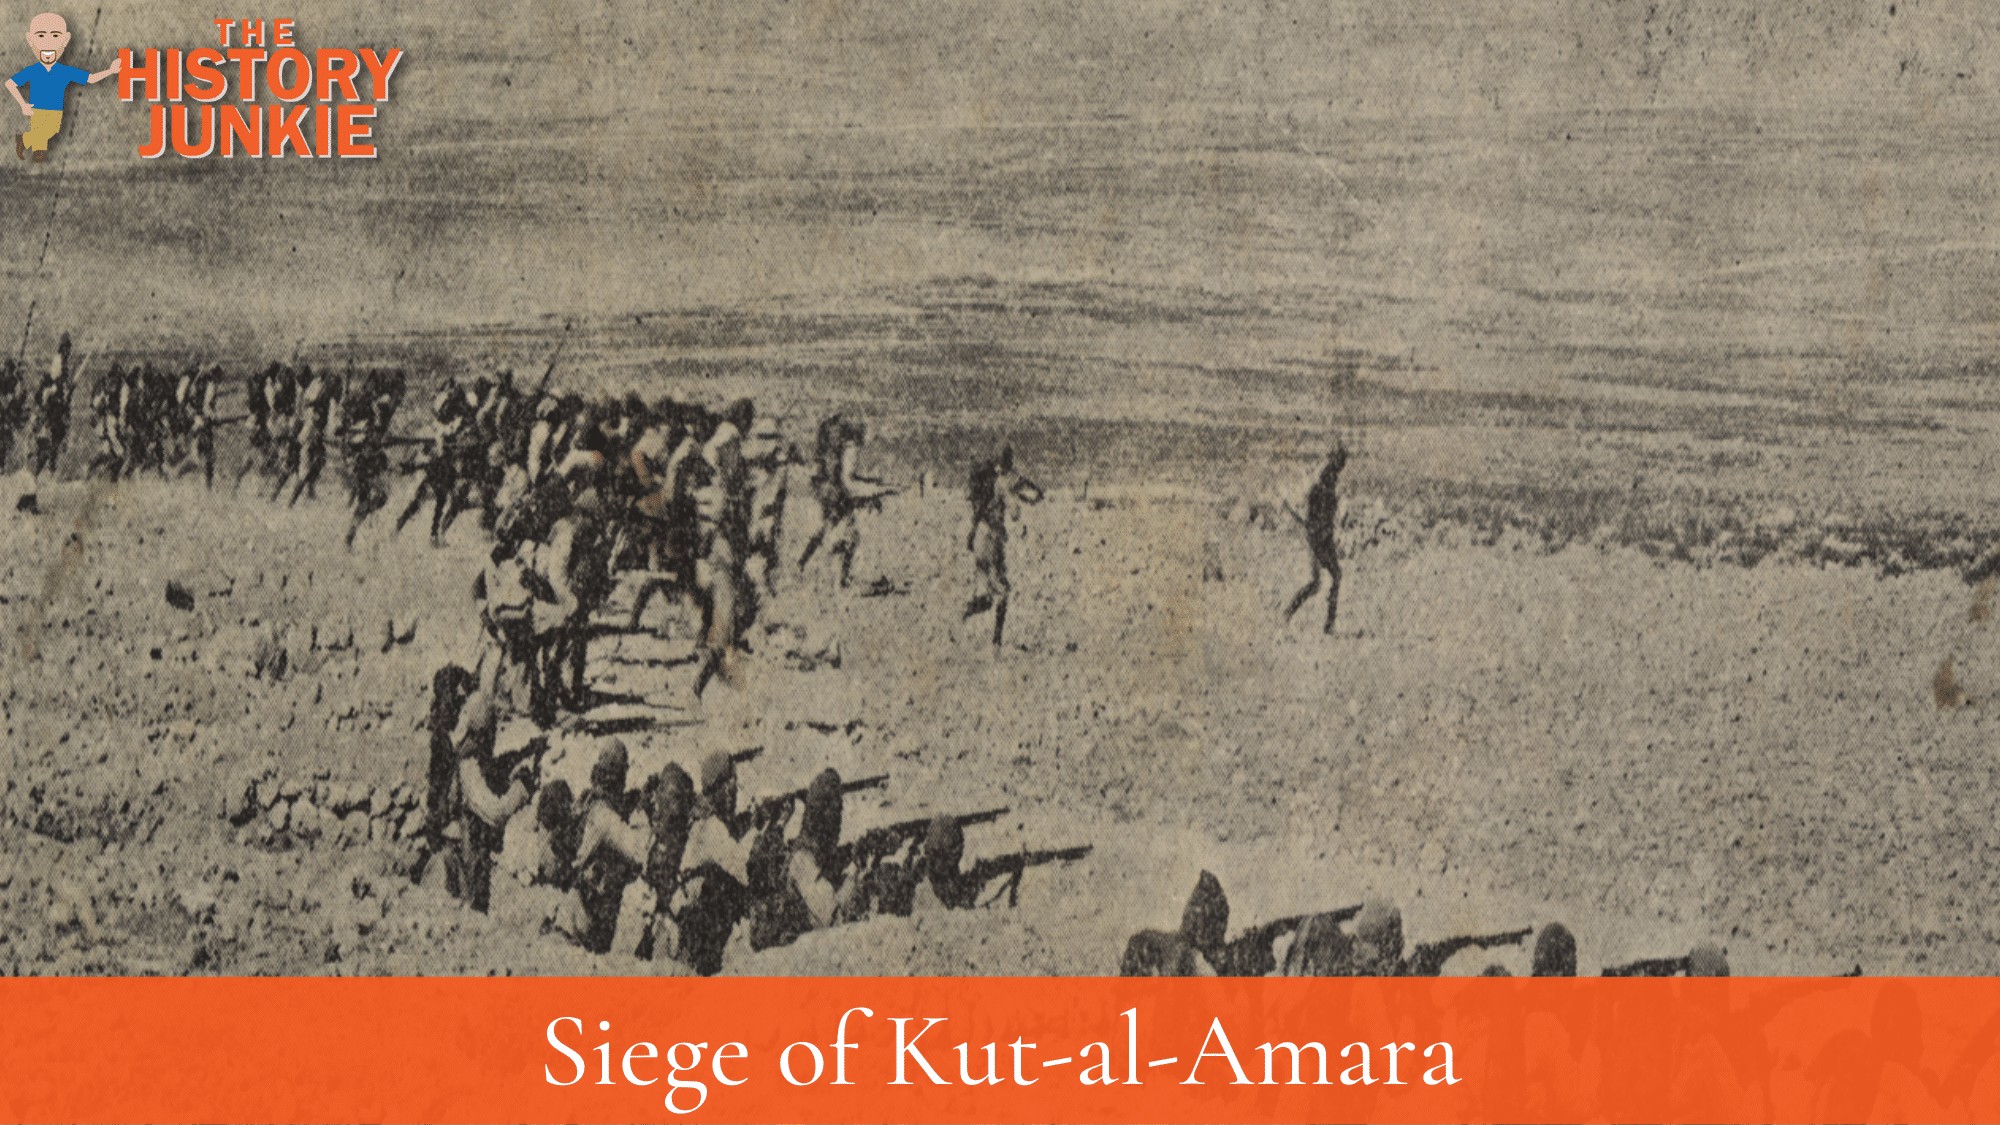 Kut-al-Amara